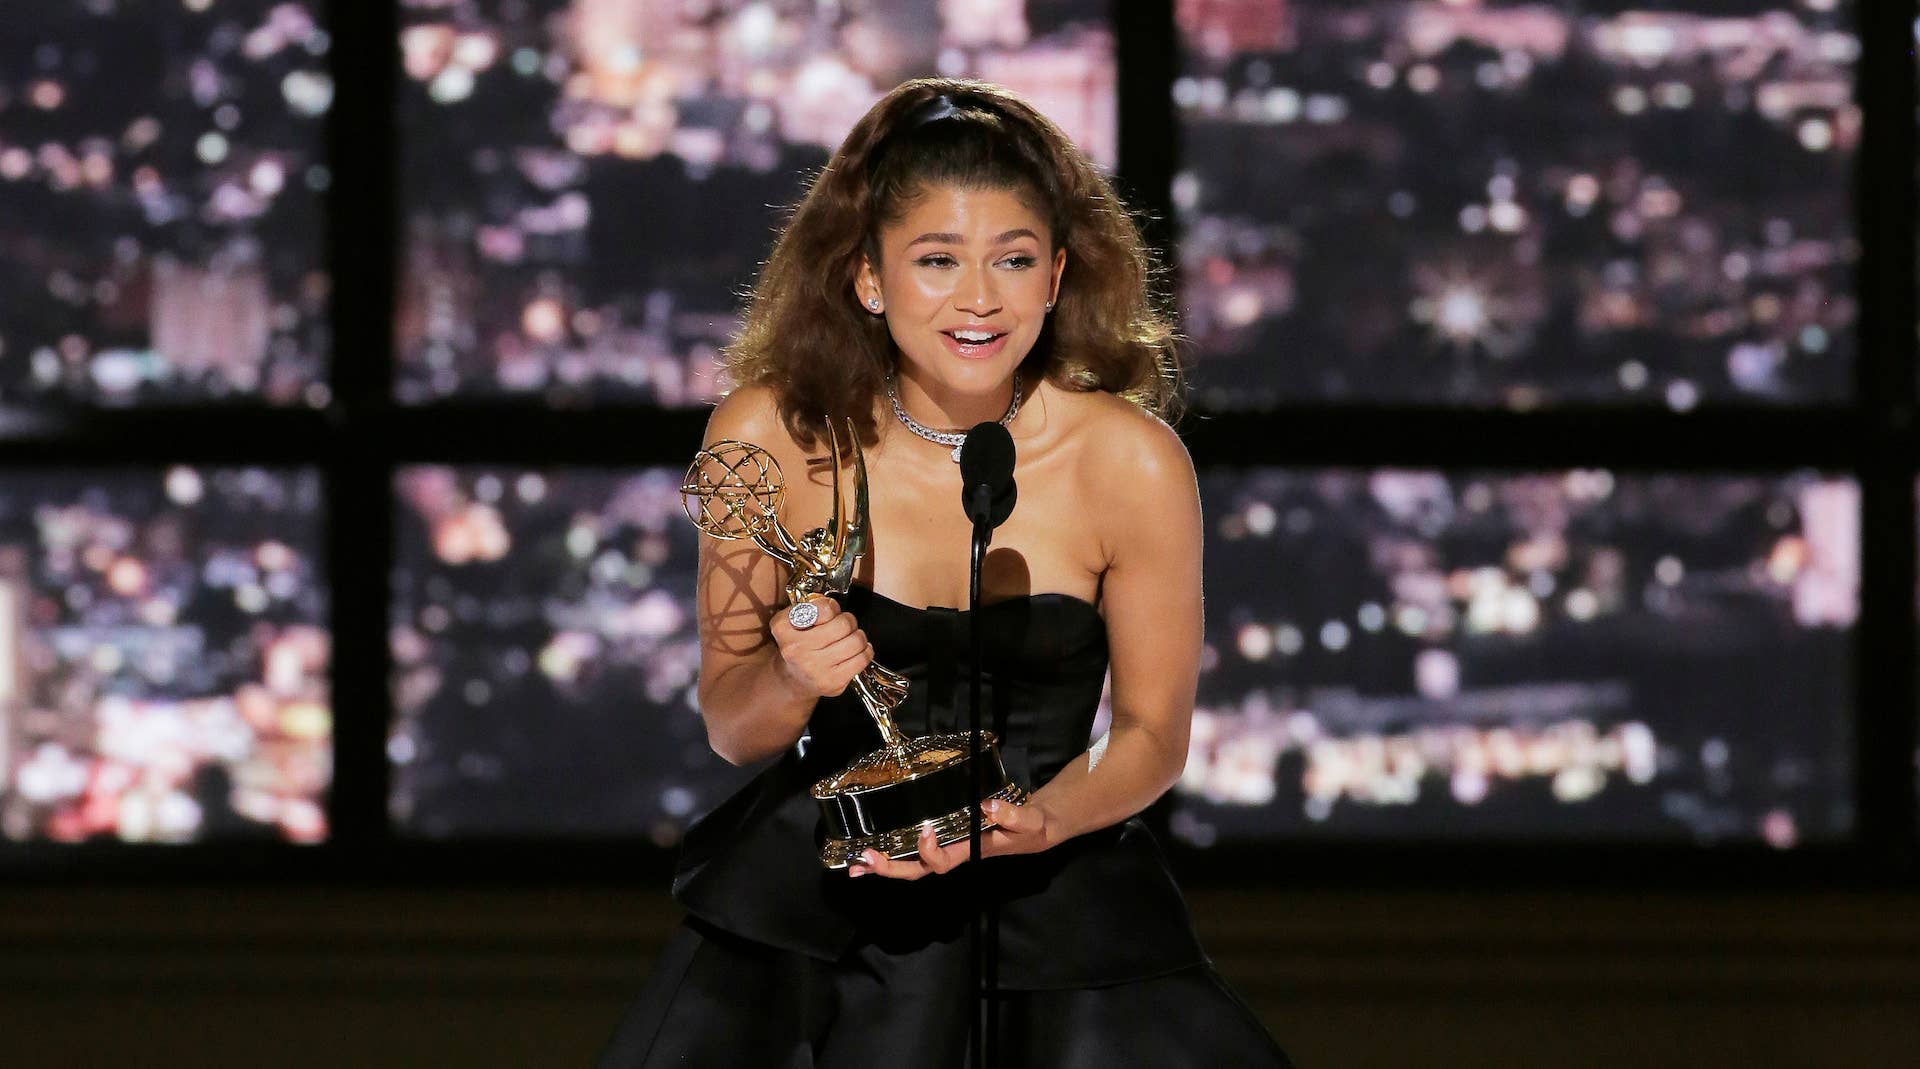 Zendaya wins the Emmy for Best Actress